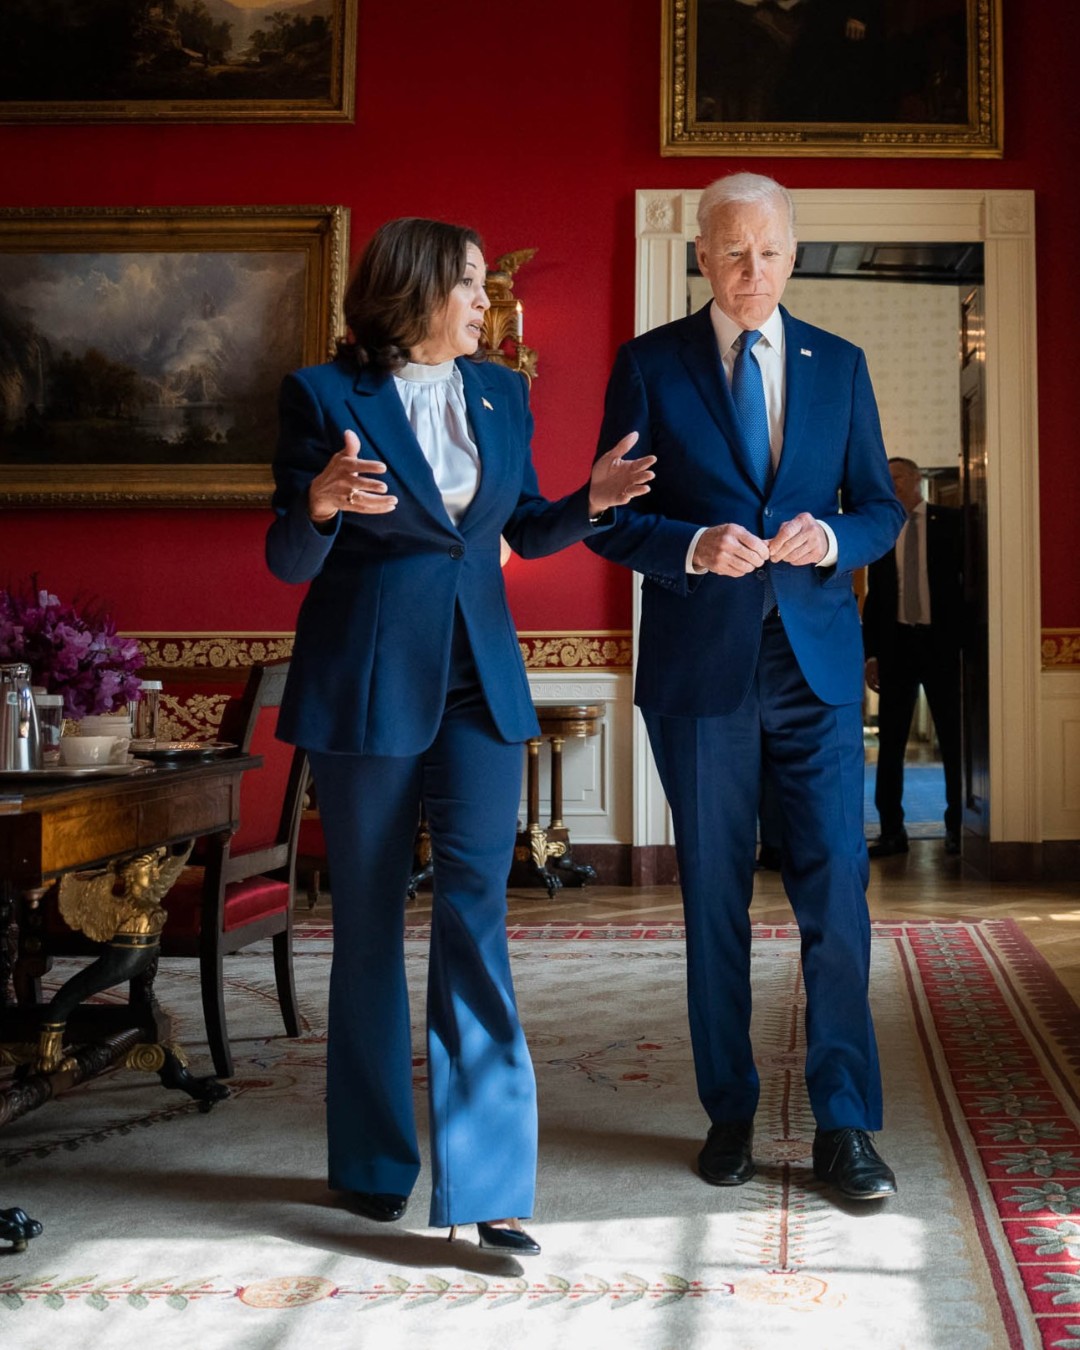 President Joe Biden talks with Vice President Kamala Harris in the Red Room of the White House.